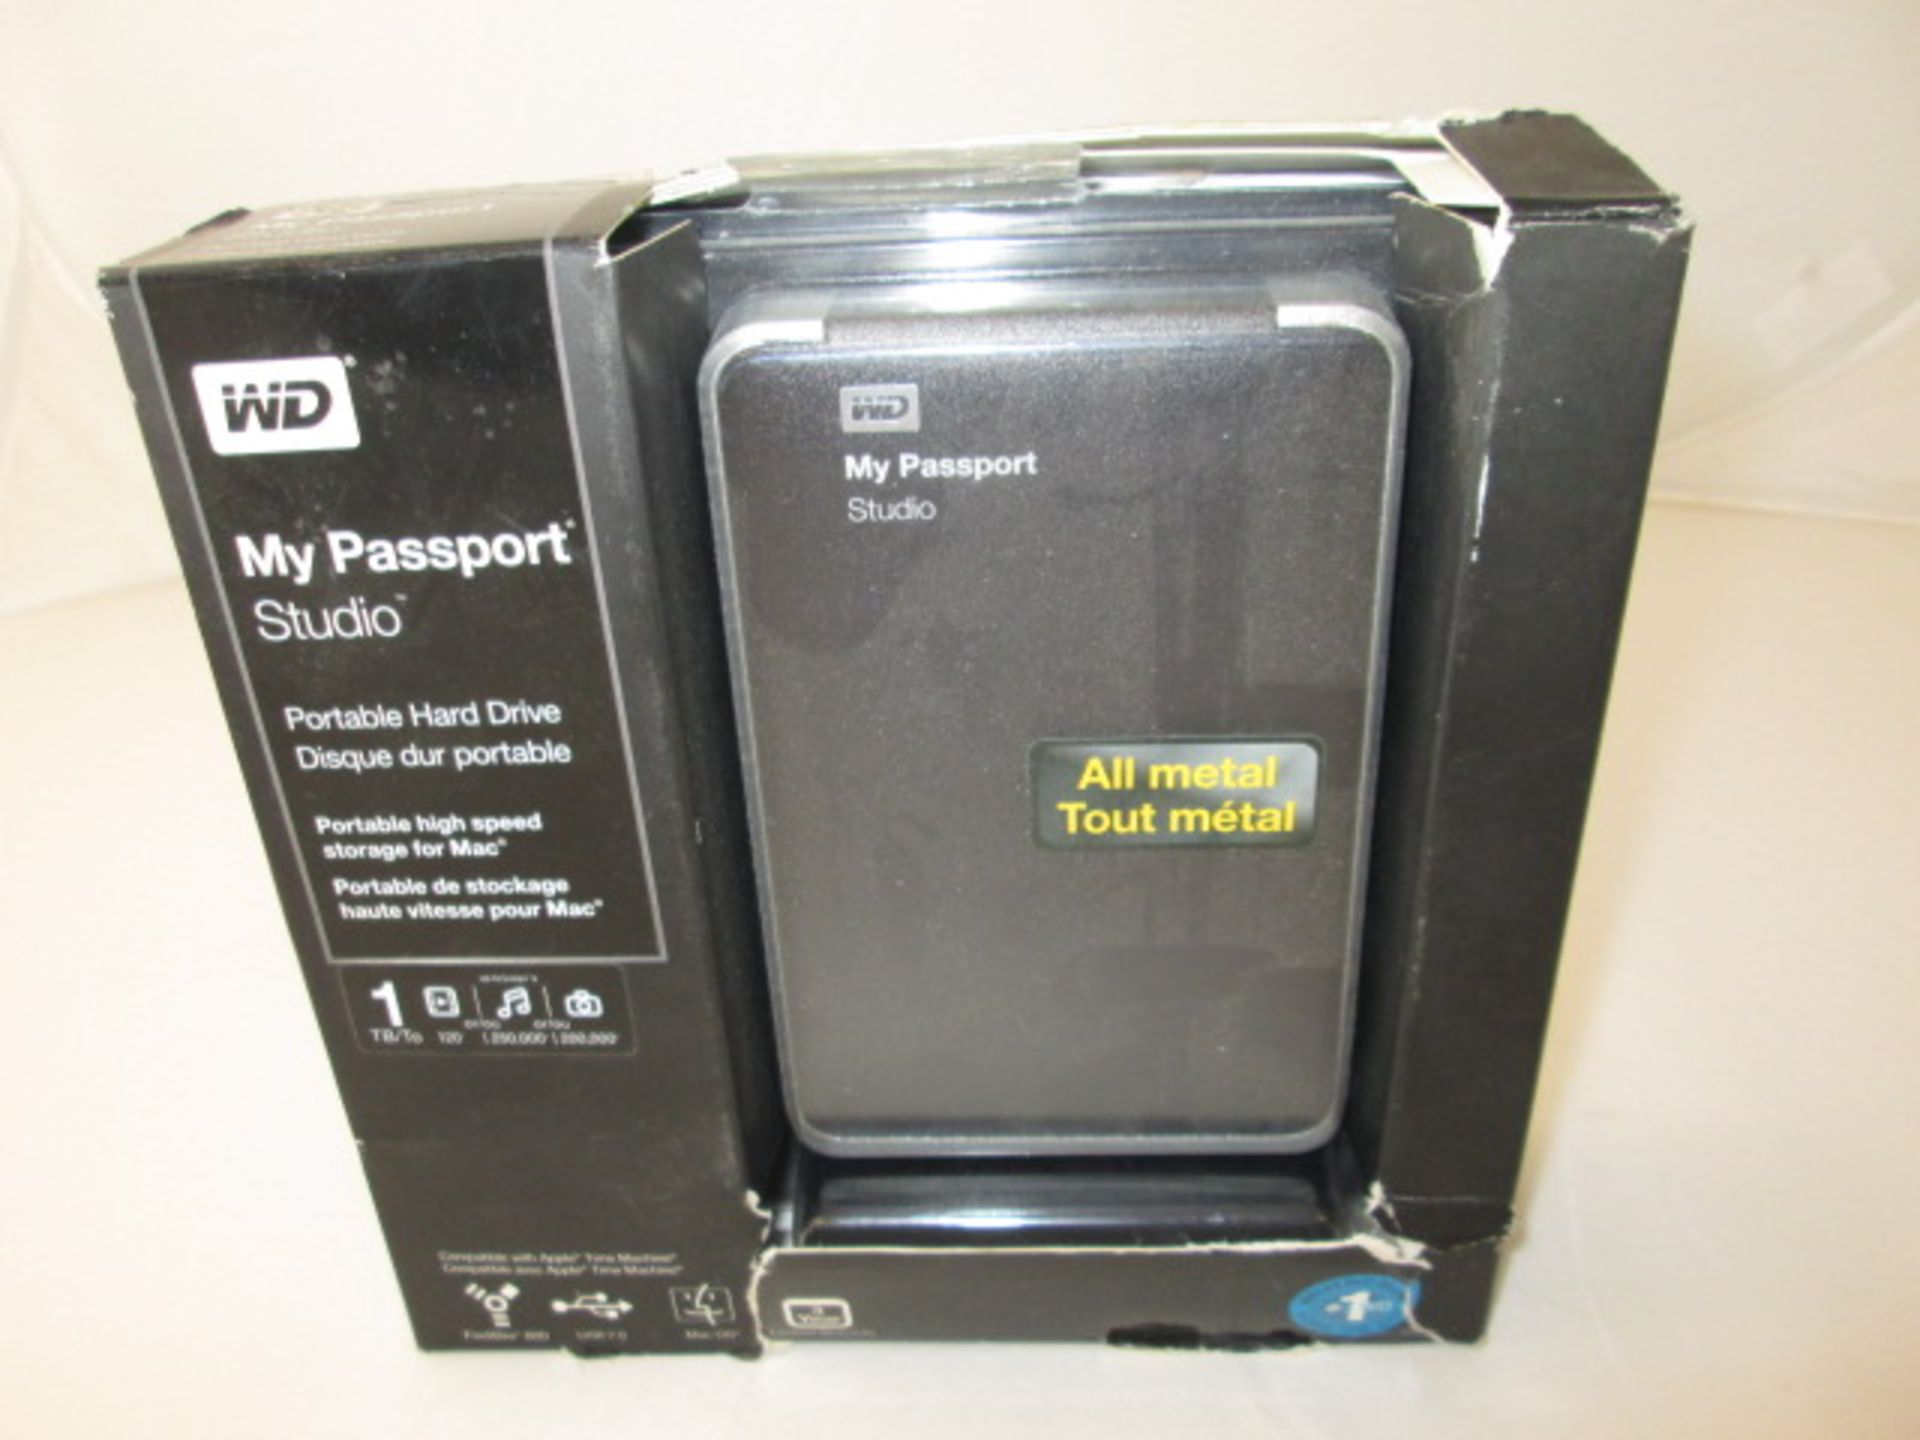 WD My Passport Studio Portable Hard Drive. 1TB. Ex Display, RRP £184.99.